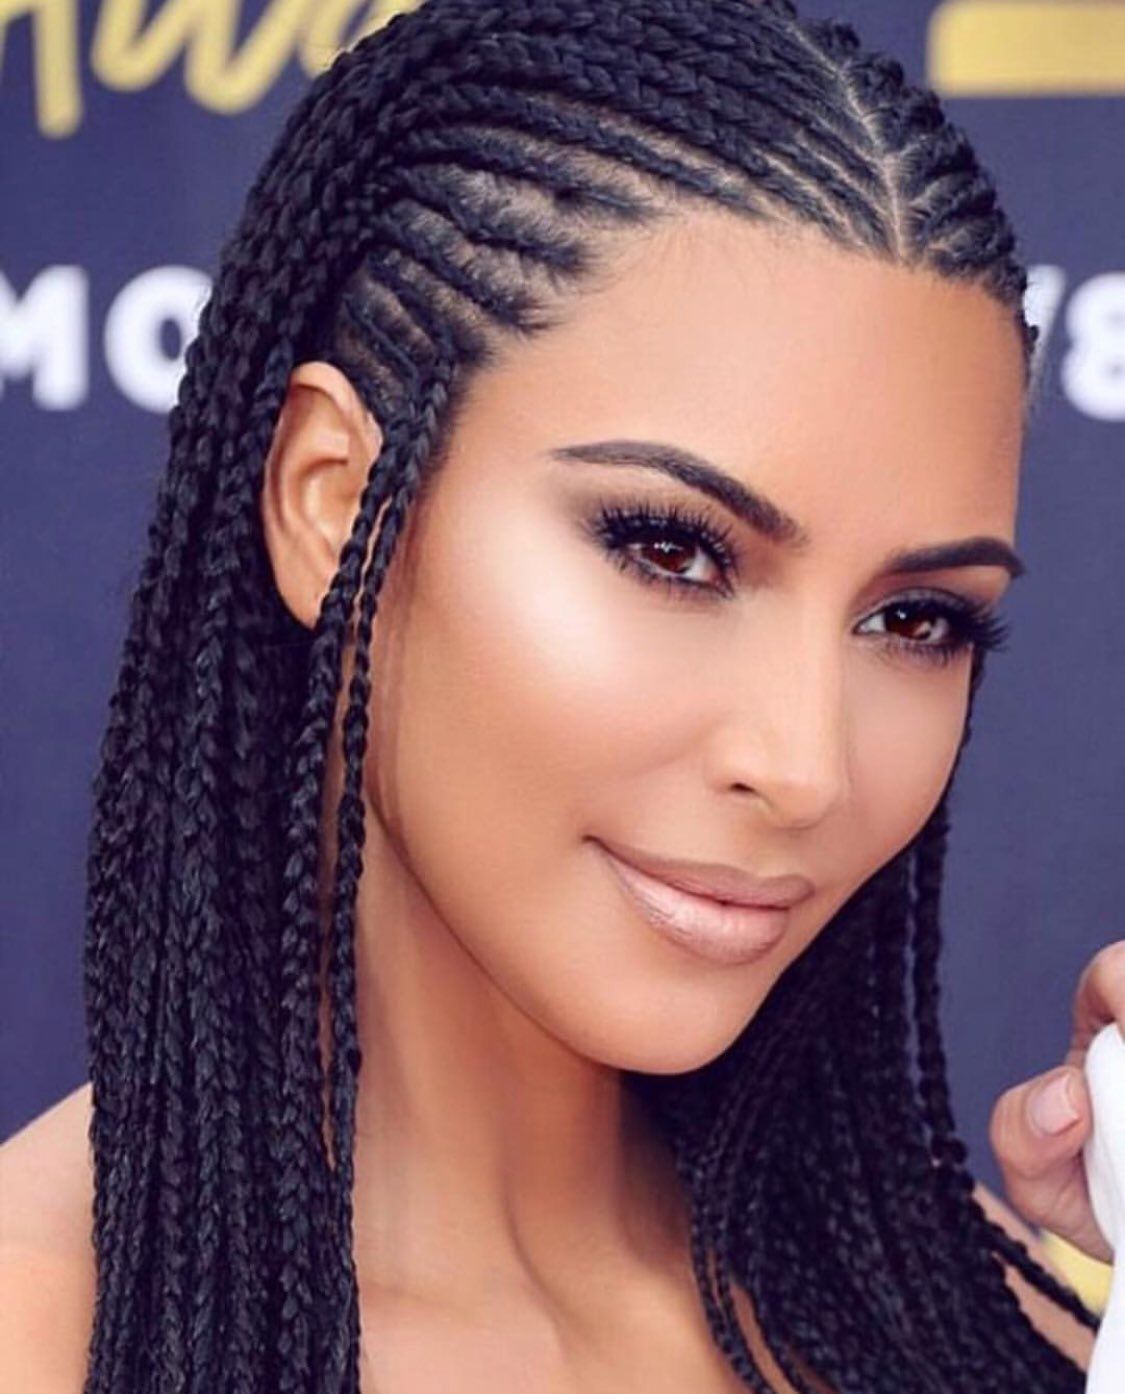 Kim Kardashian Rocks African Braids to the MTV Movie and TV Awards (photos)